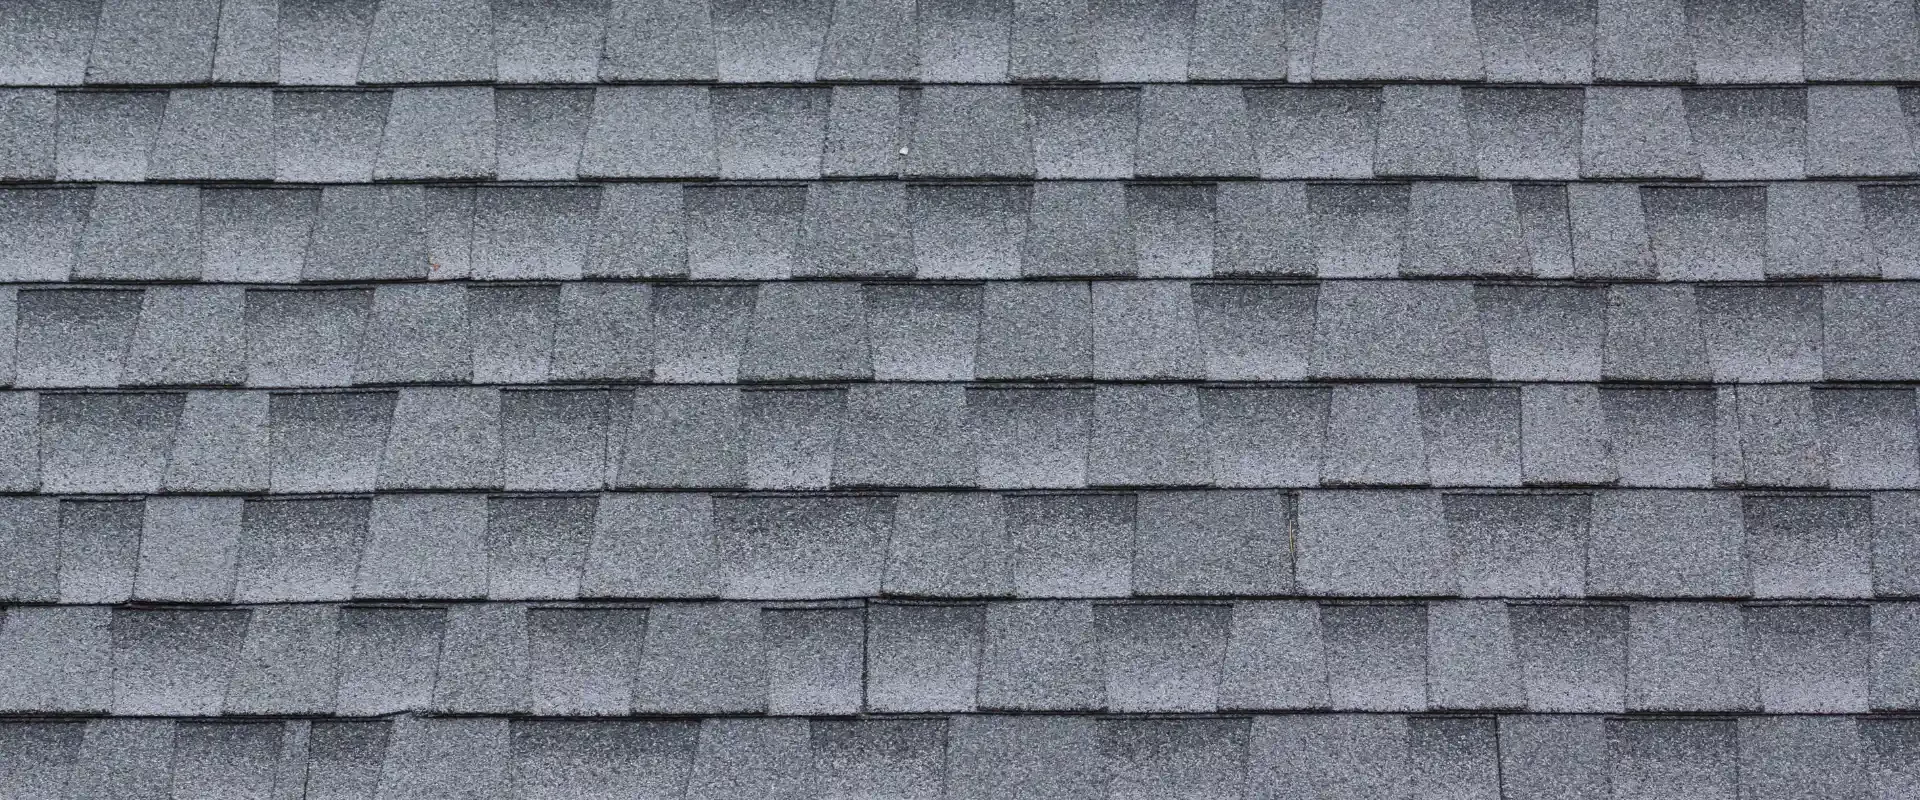 grey asphalt tiles roofing of a house